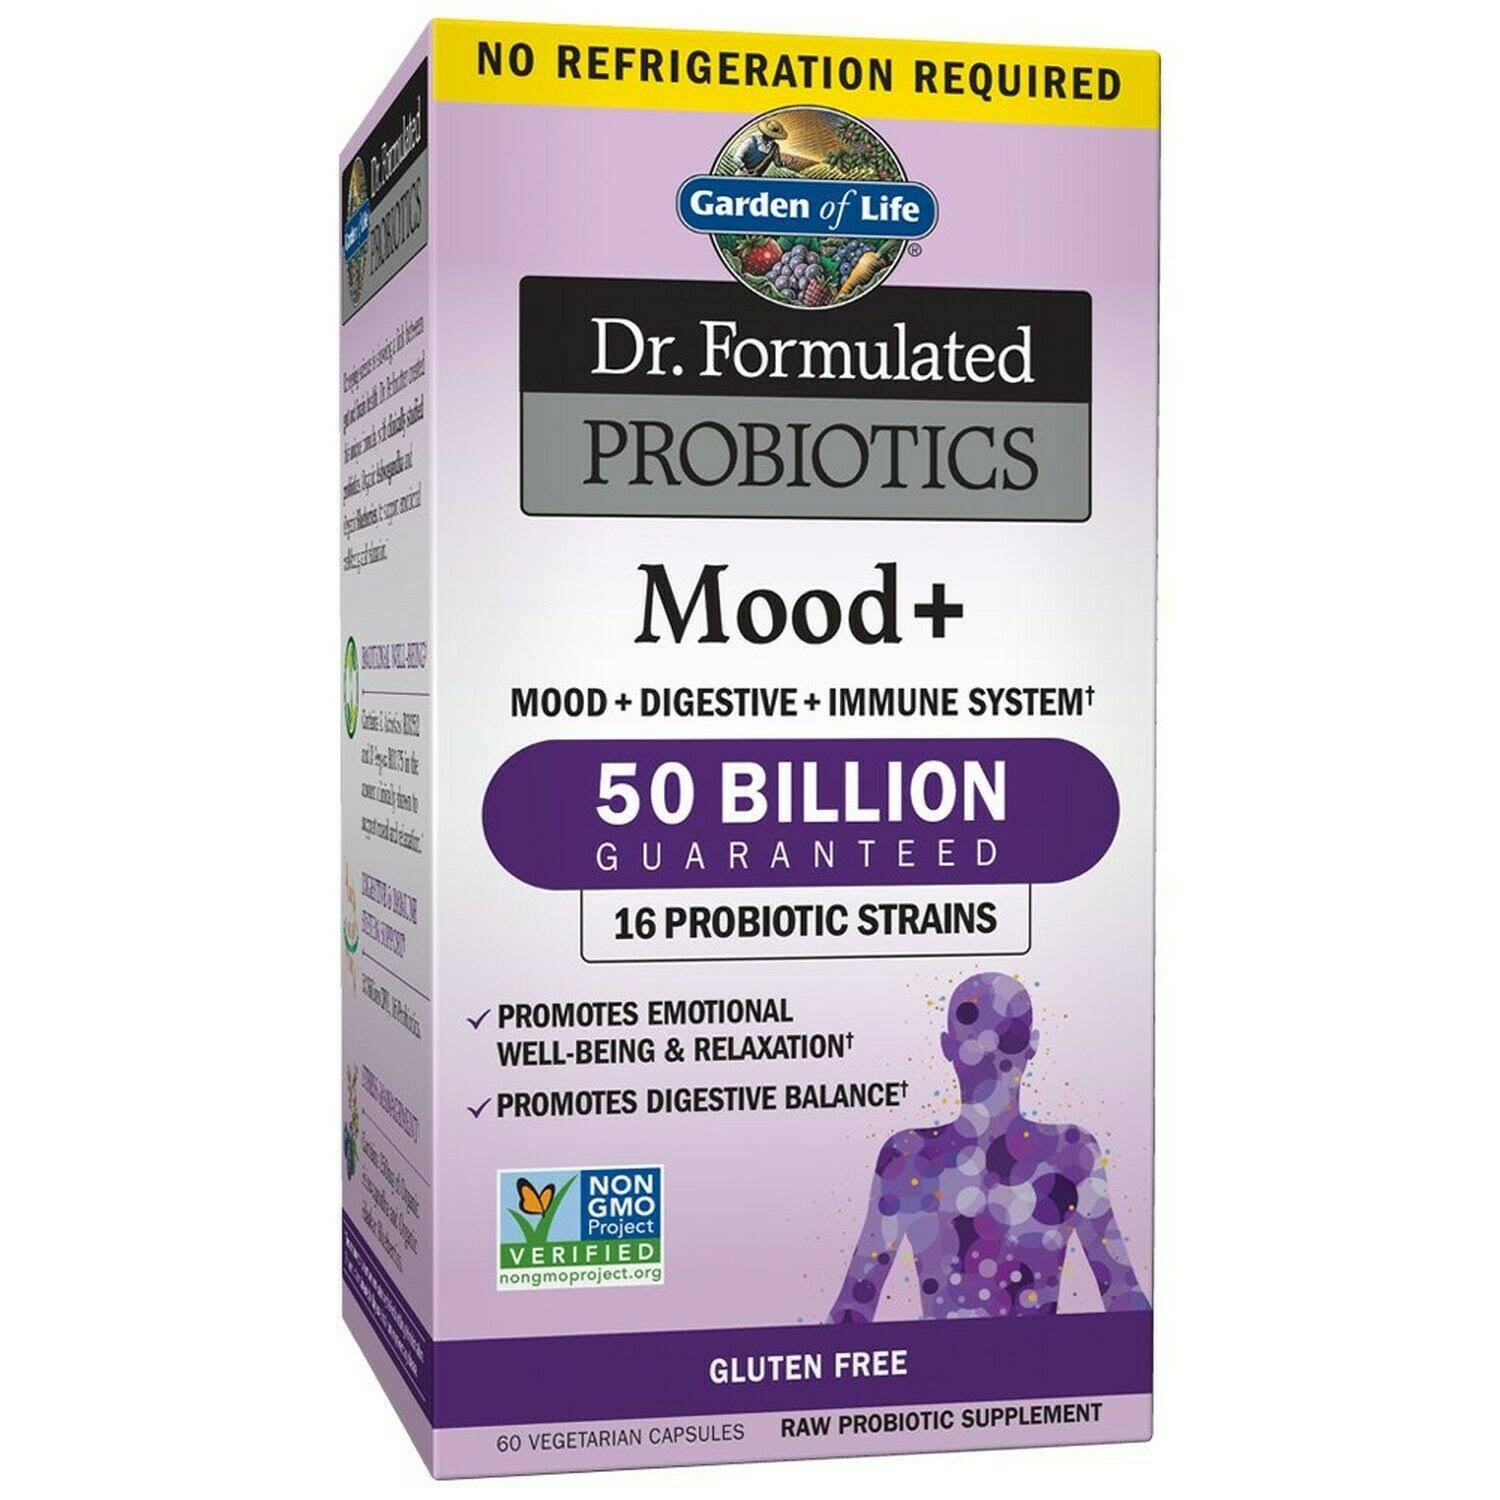 Garden of Life Dr. Formulated Probiotics Mood+ Supplement - 60 Vegetarian Capsules